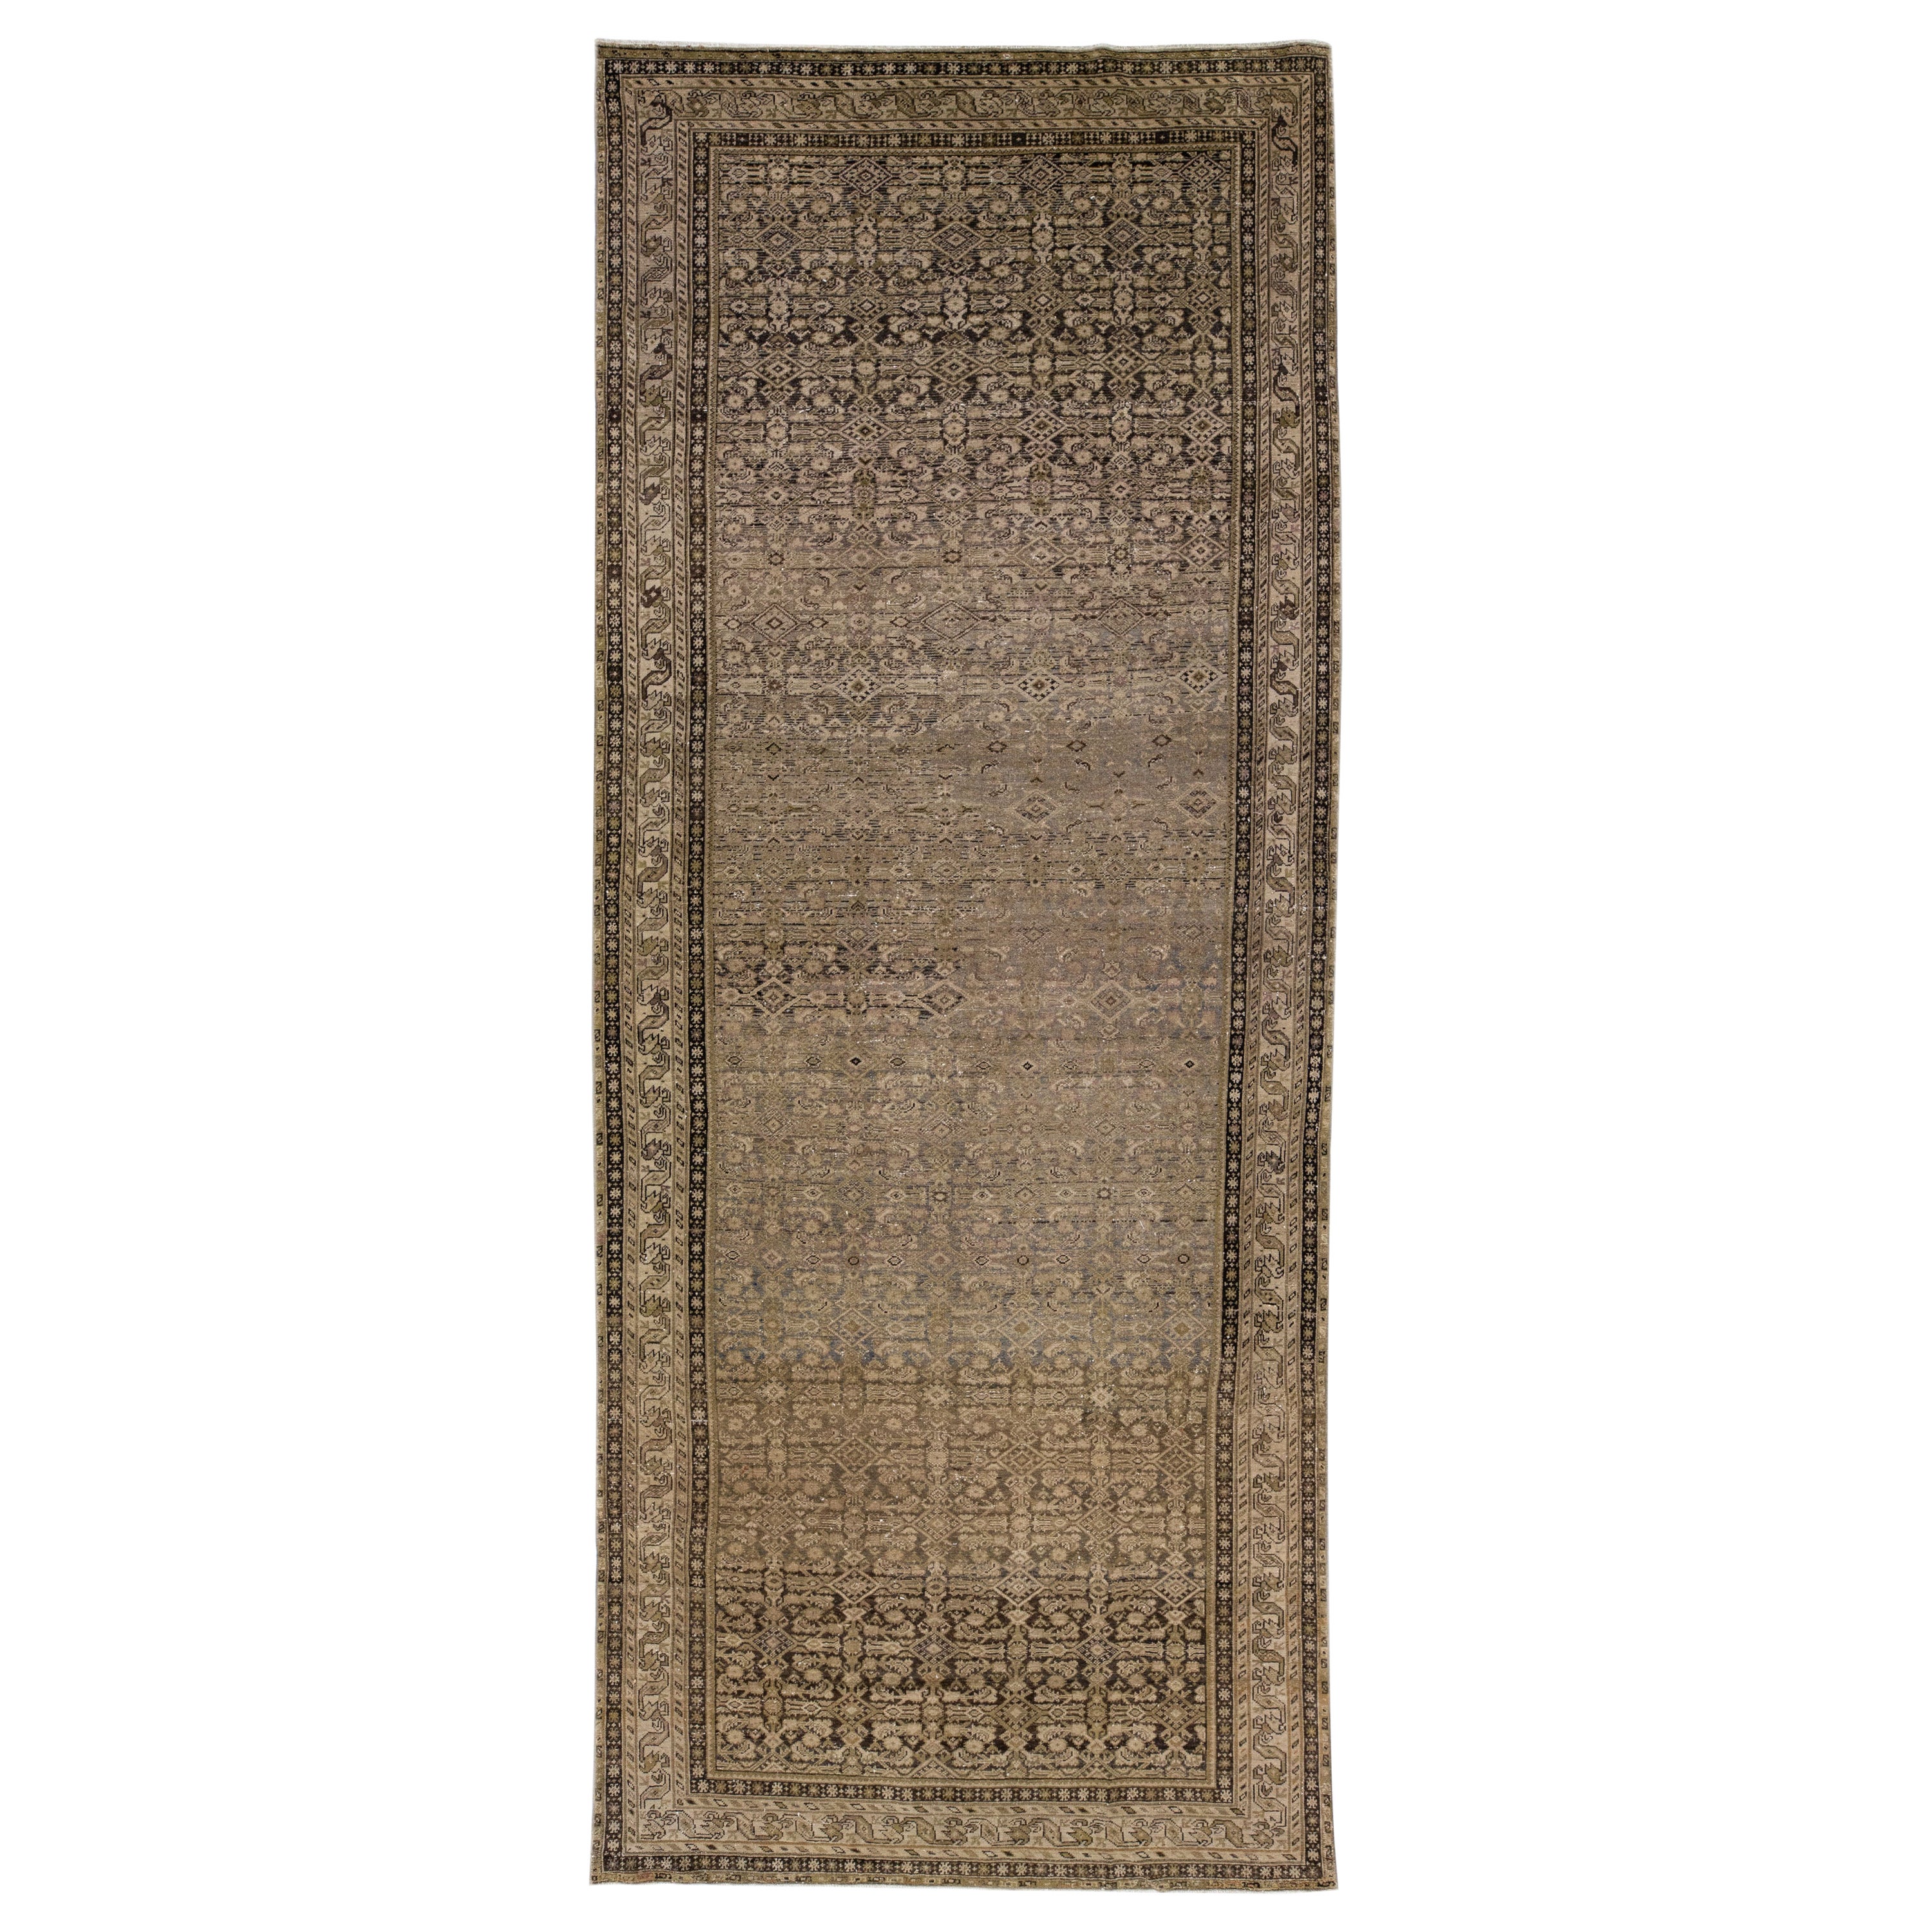 20th Century Antique Persian Malayer Handmade Allover Motif Tan Wool Rug